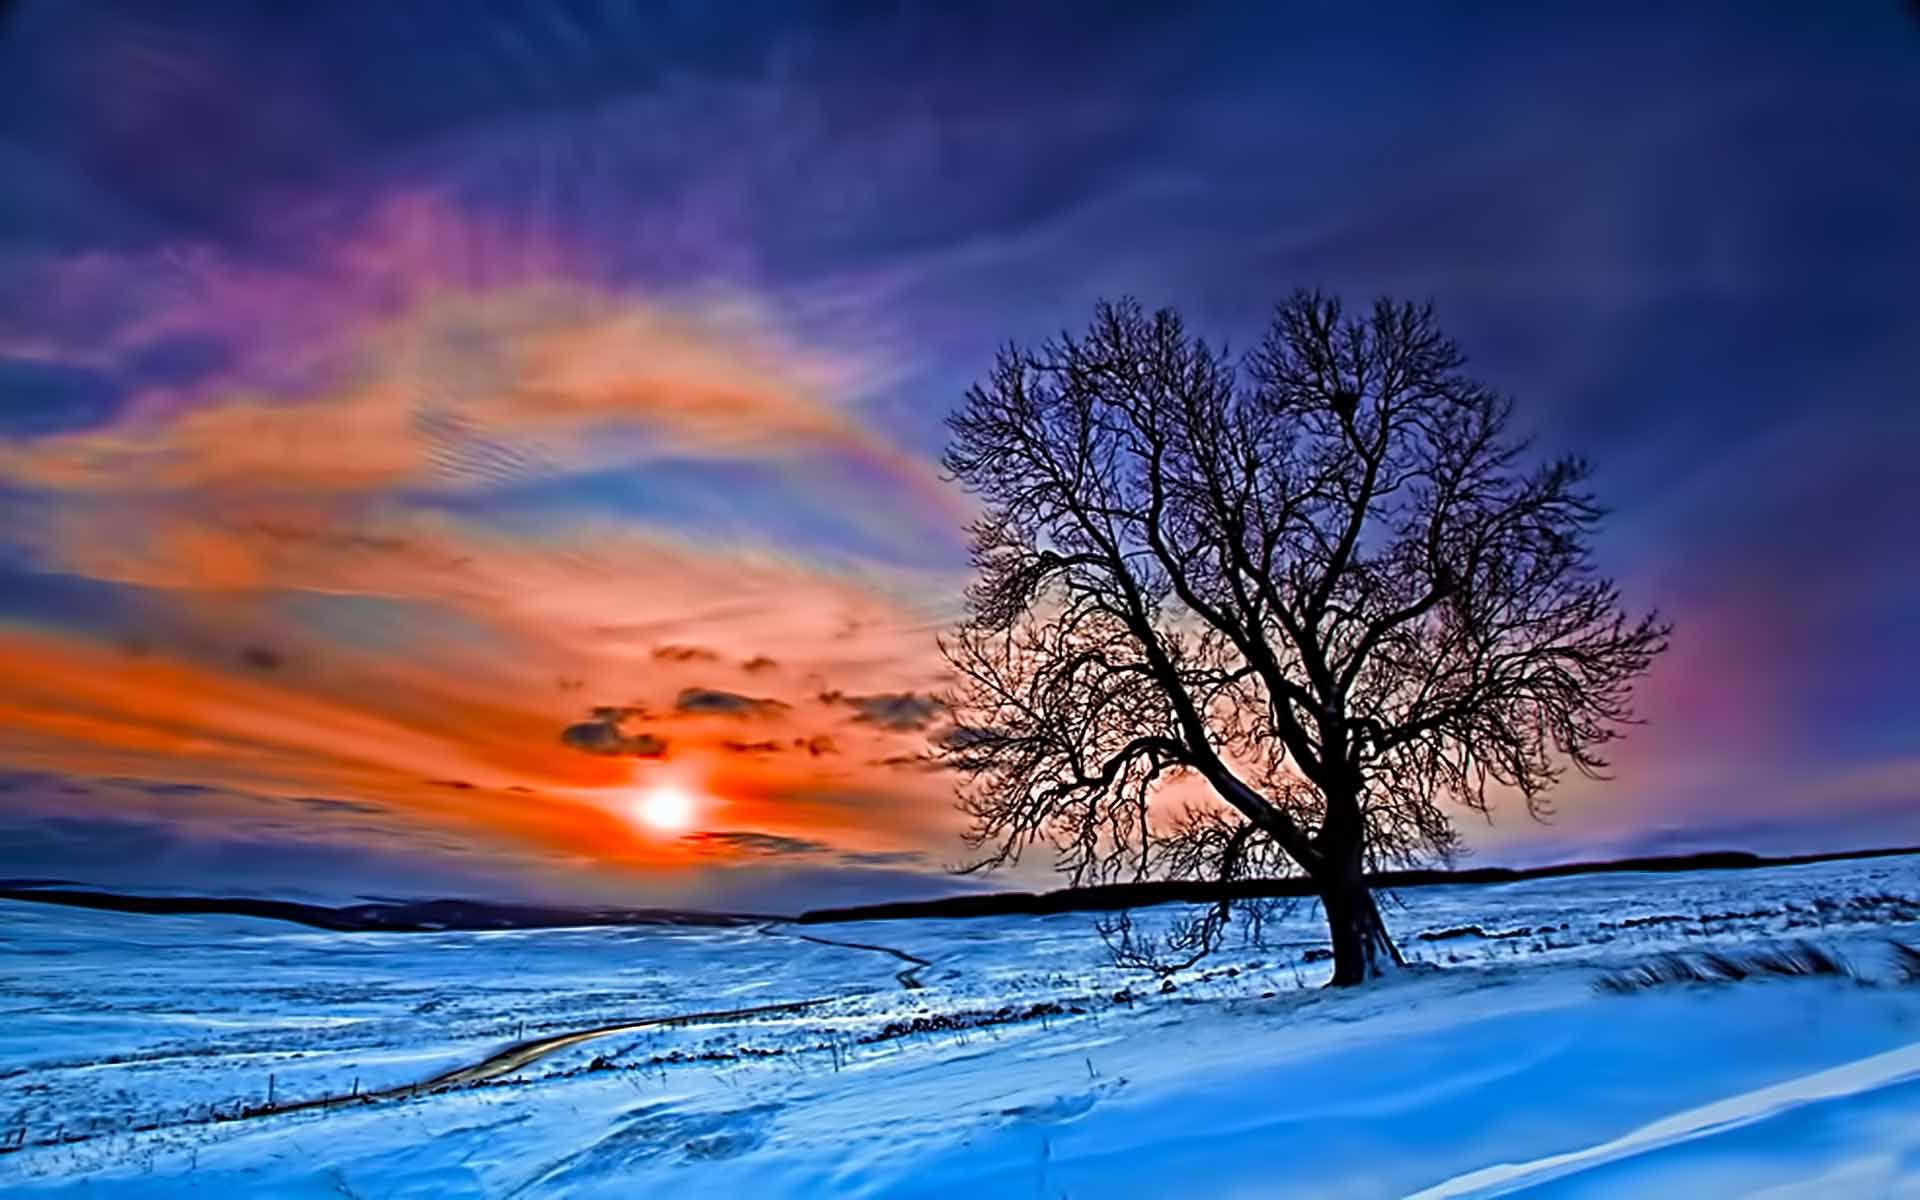 HD Winter Sunrise Wallpaper. Download Free -95468. Winter sunset, Sunrise wallpaper, Winter nature